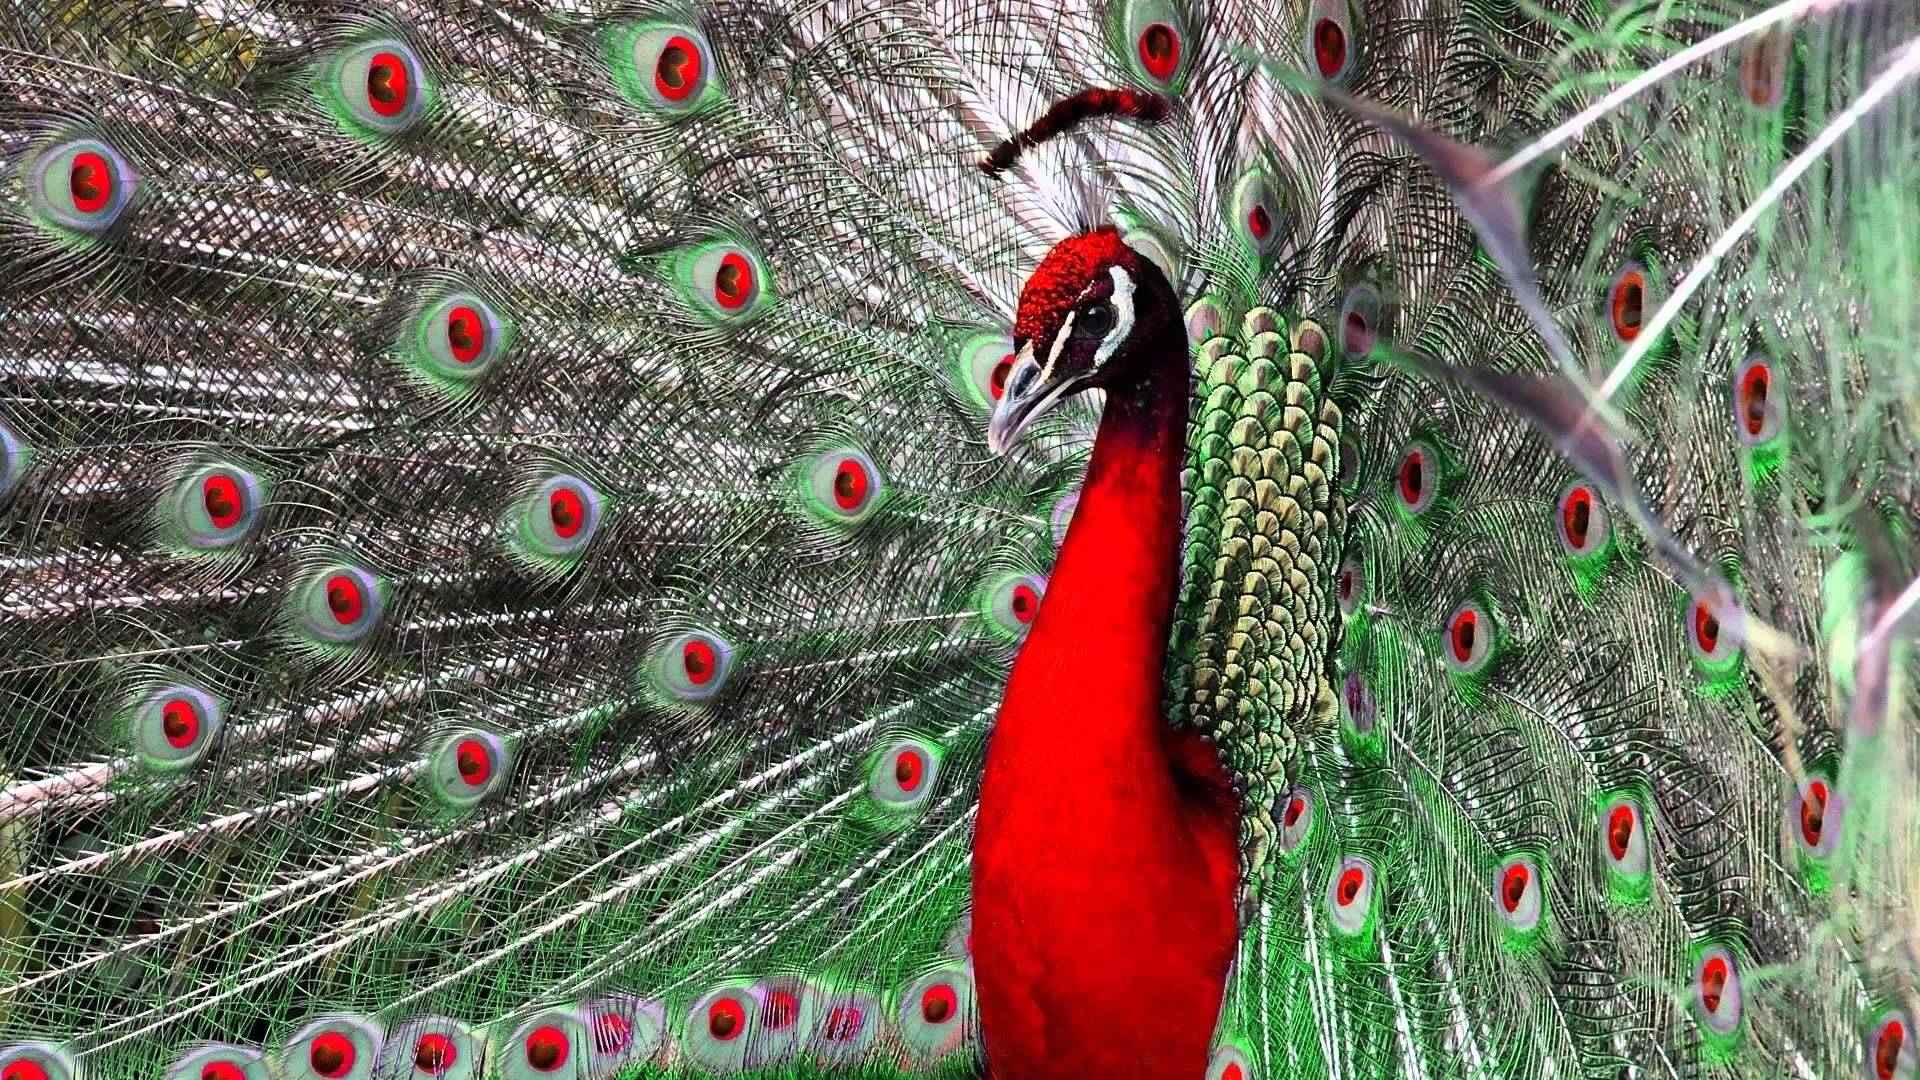 beautiful peacock images hd